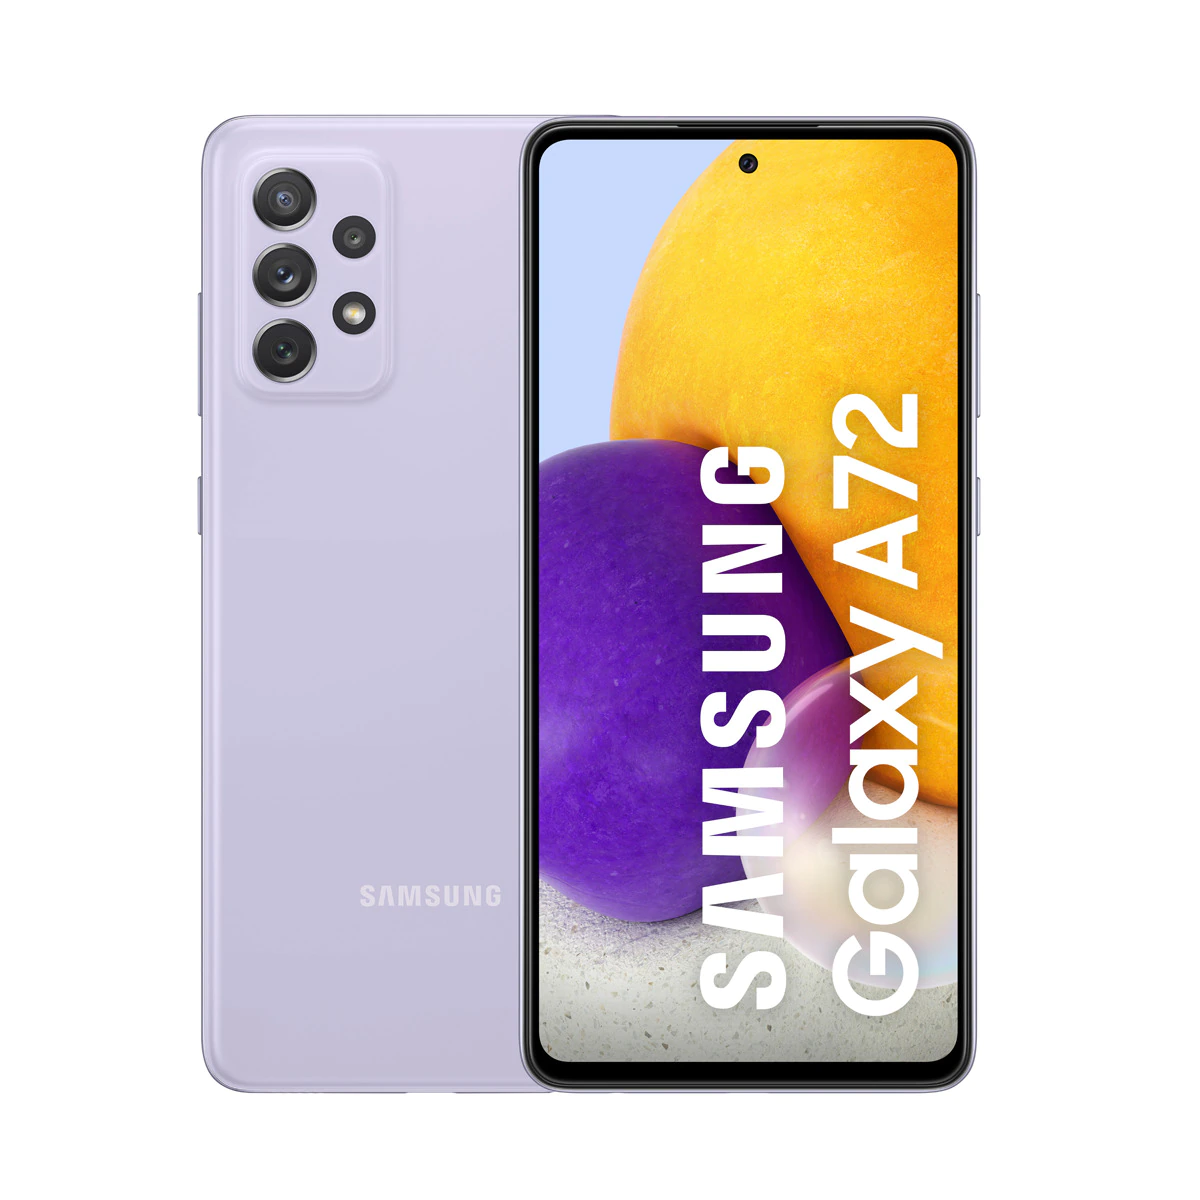 Samsung Galaxy A72 6 GB + 128 GB violeta móvil libre